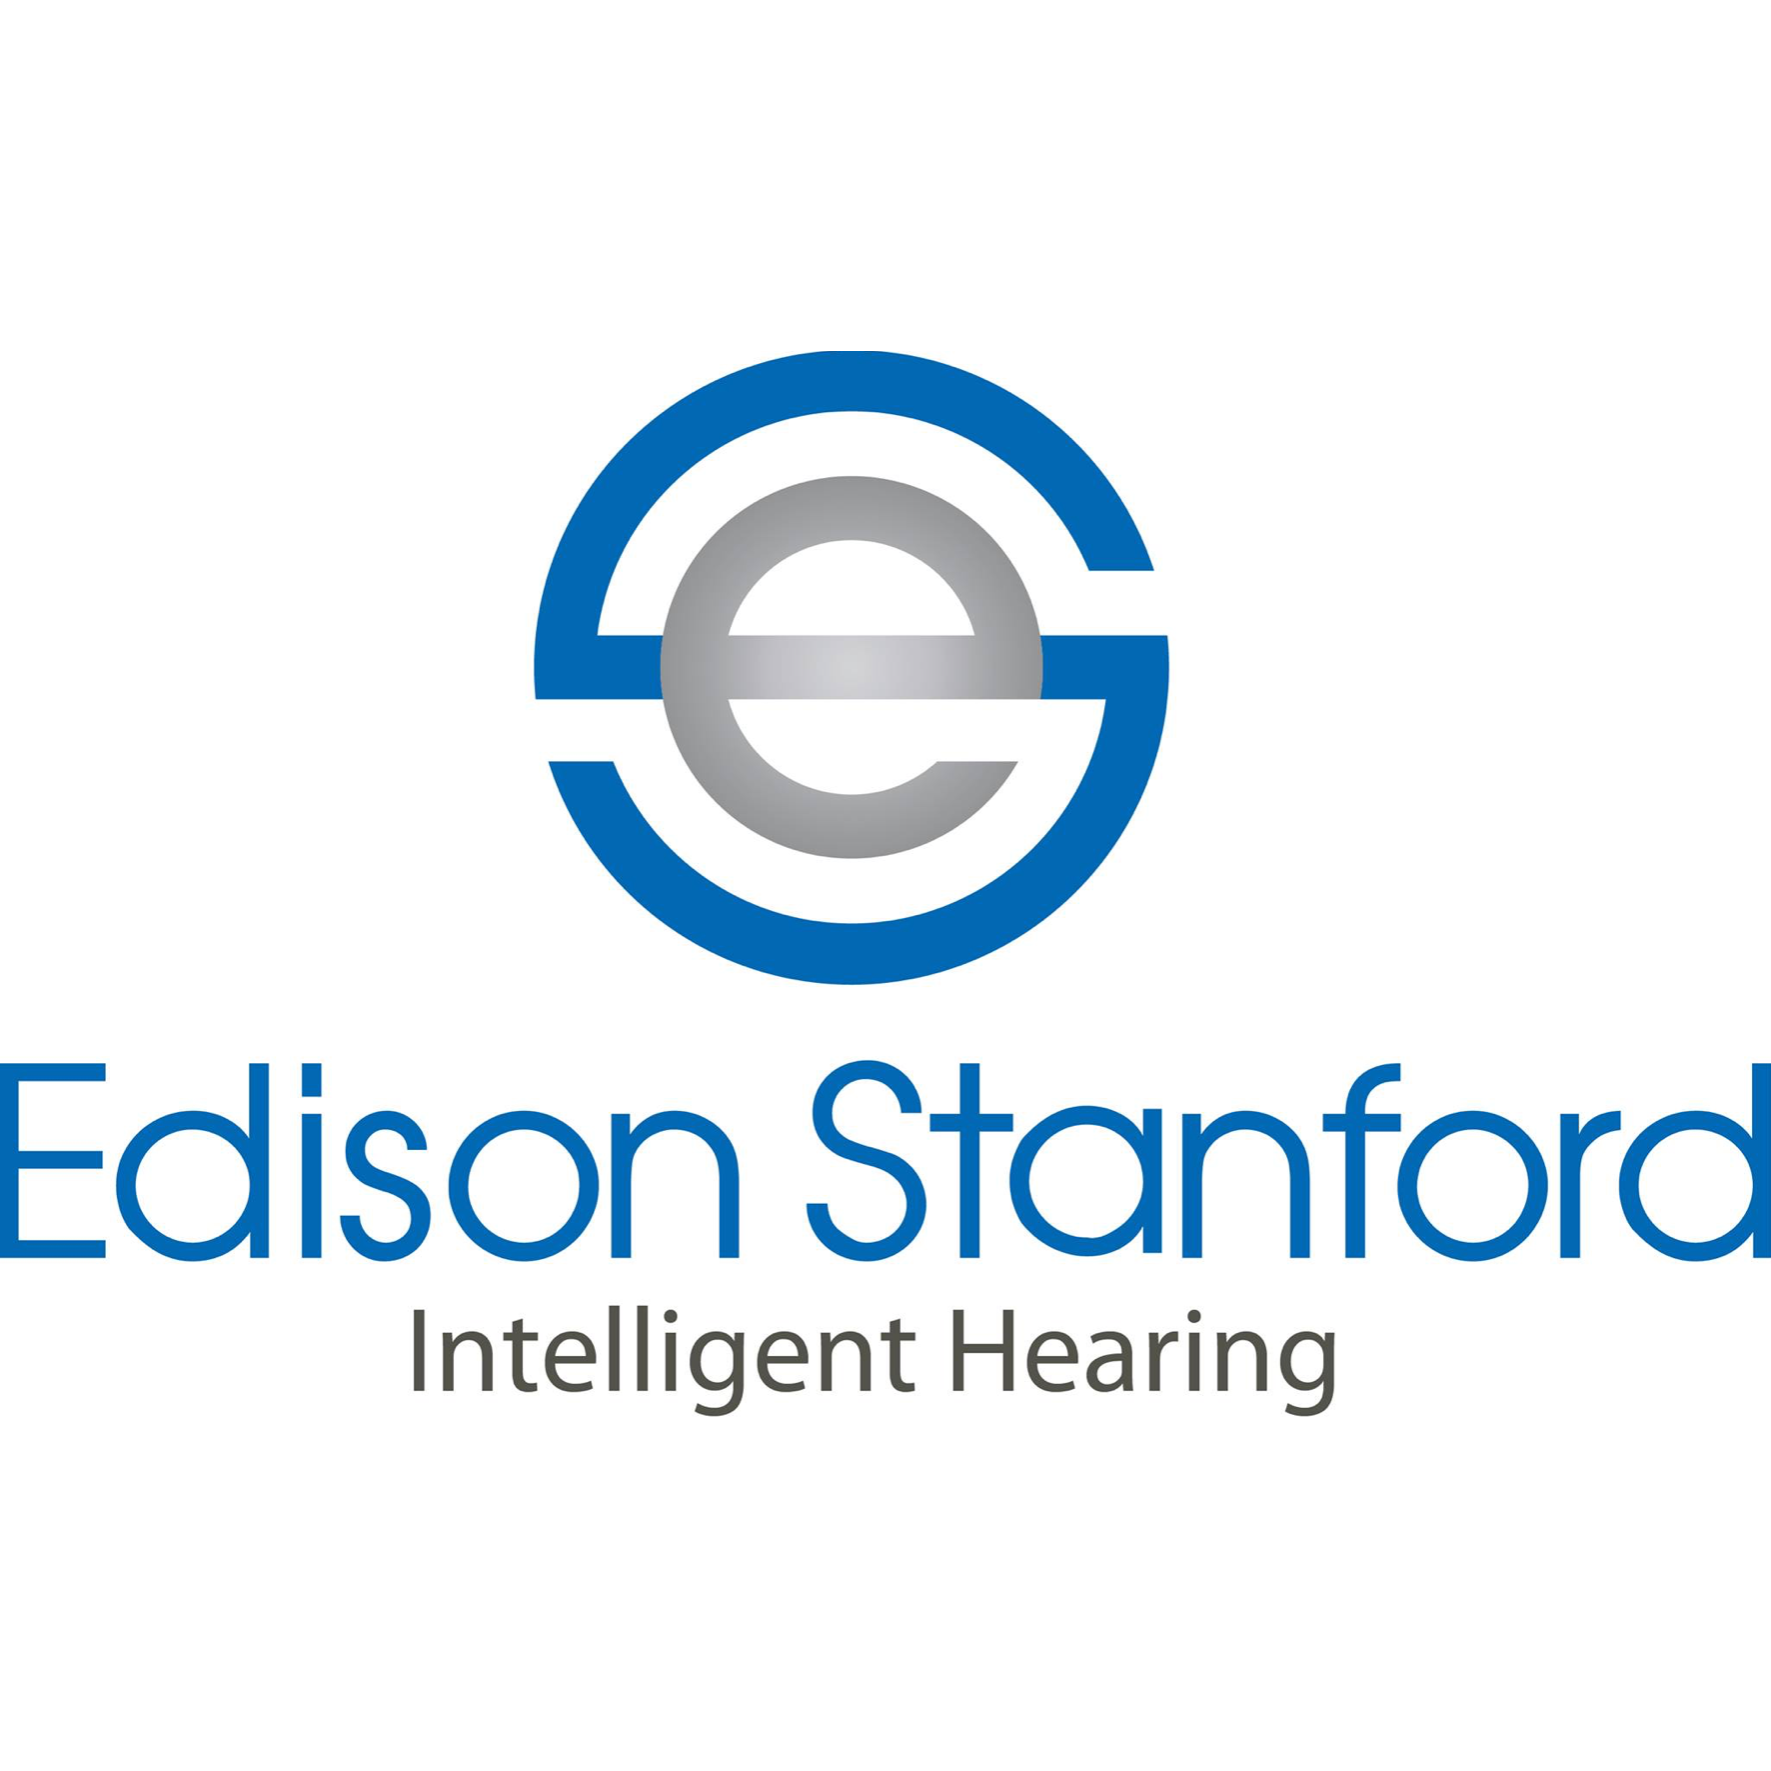 Edison Stanford Intelligent Hearing - Draper, UT 84020 - (801)683-0893 | ShowMeLocal.com